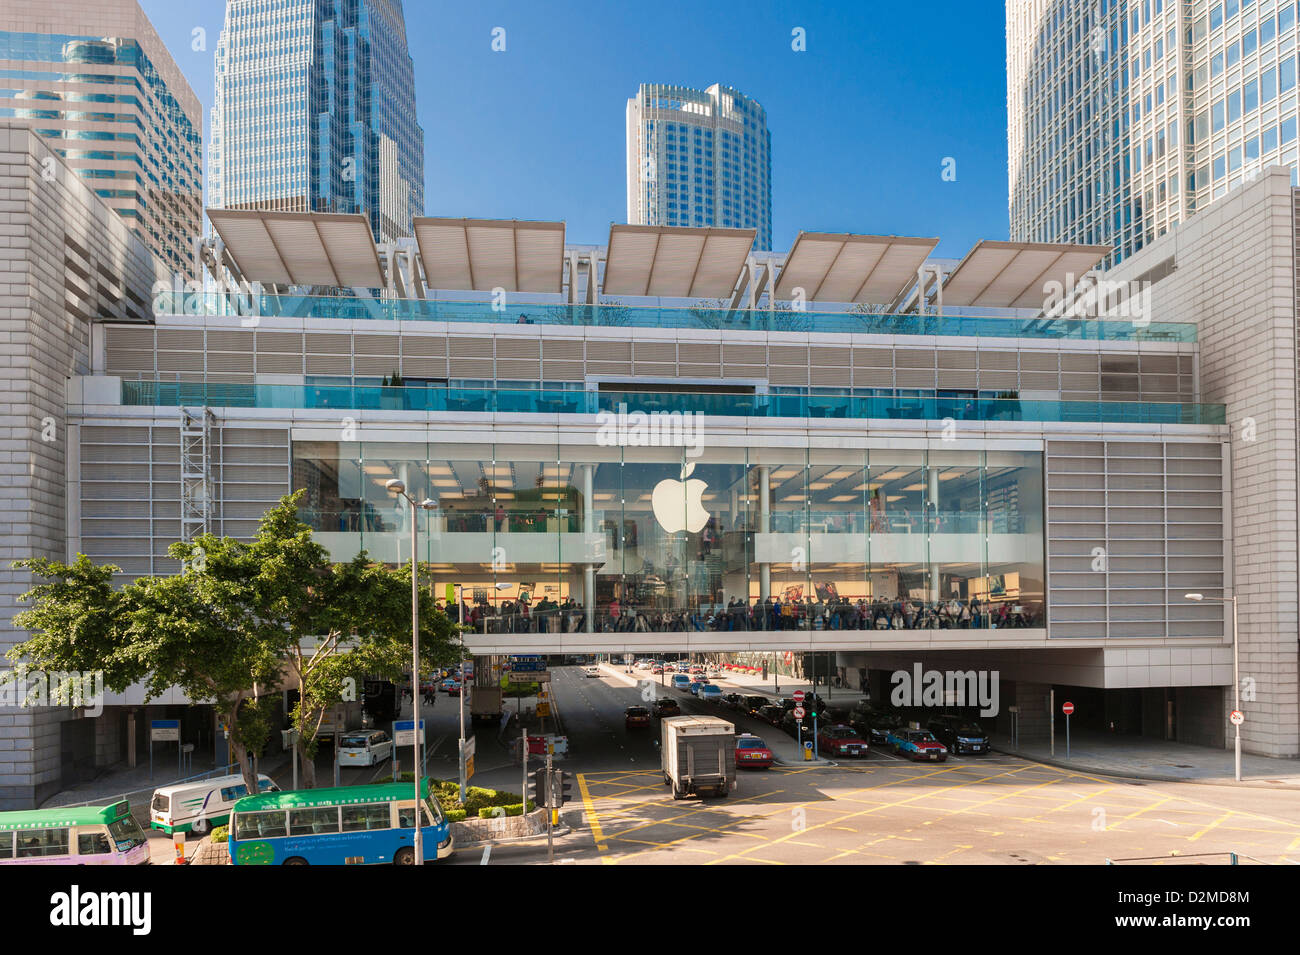 Apple Store at the IFC centre, Hong Kong Stock Photo